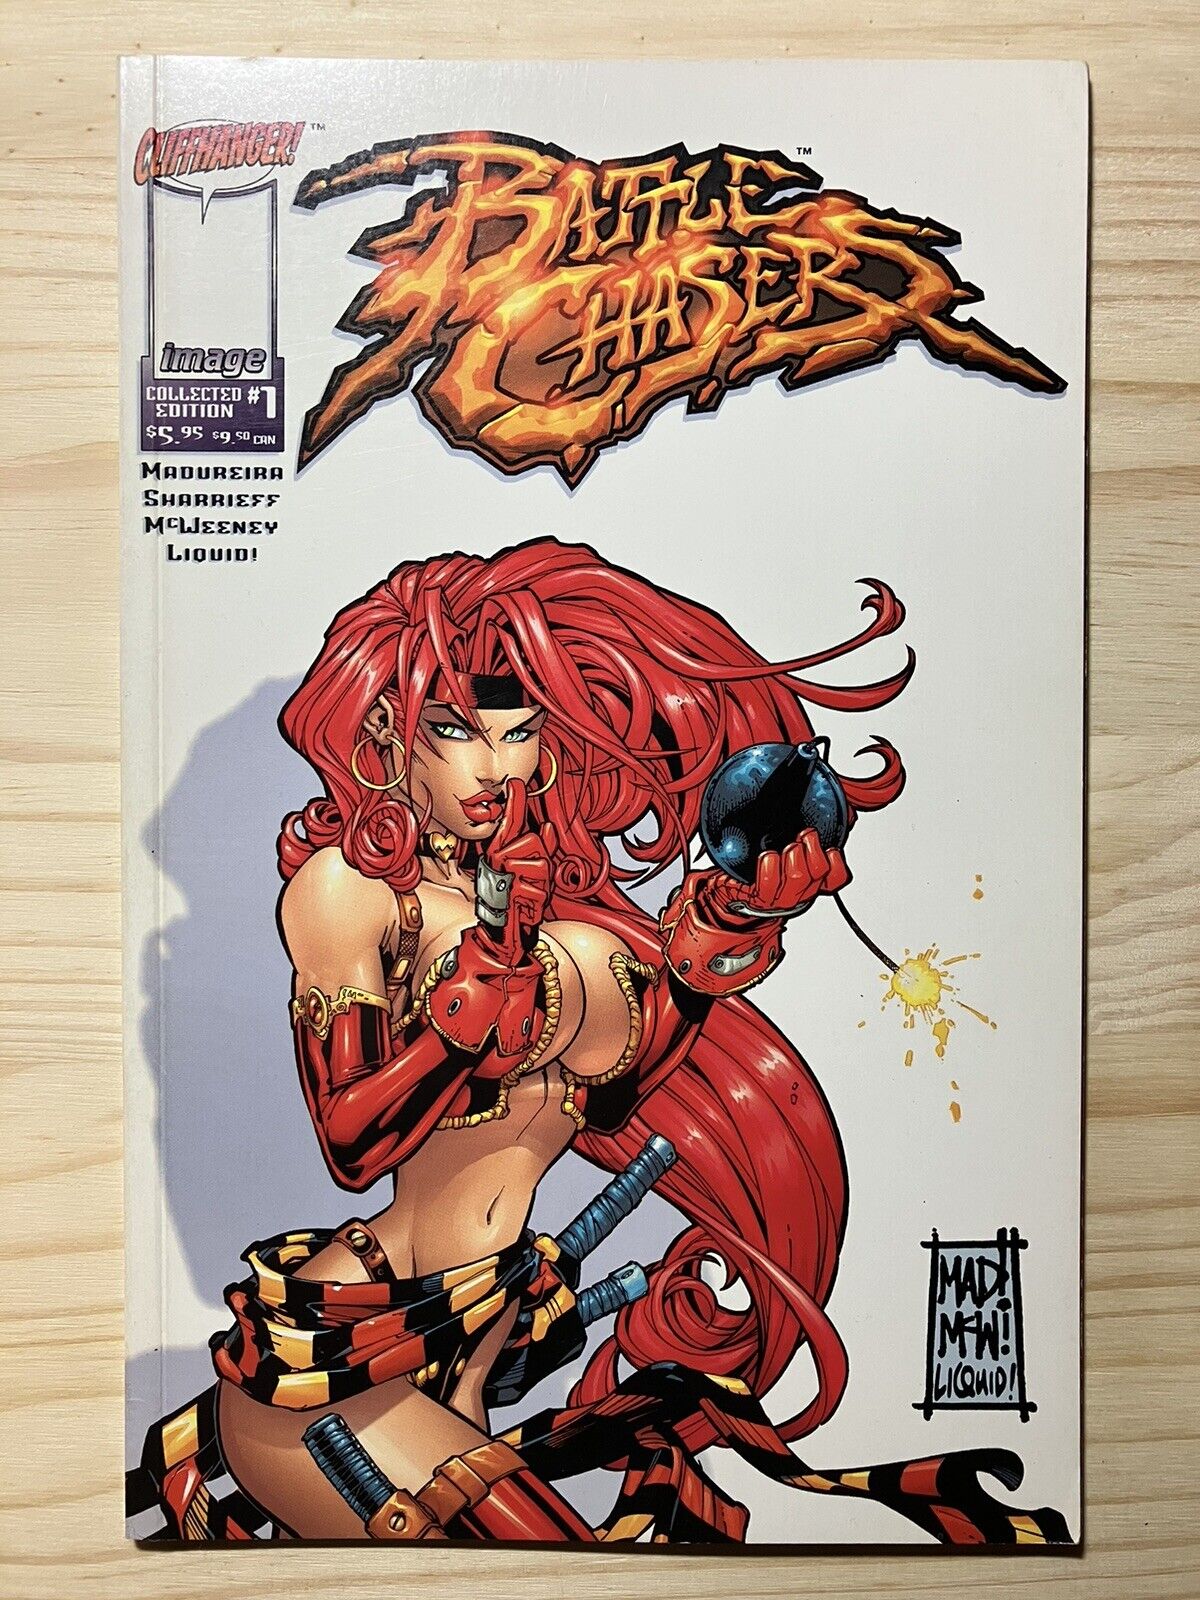 Battle Chasers Collected Edition #1 (Image Comics Malibu Comics November 1998)